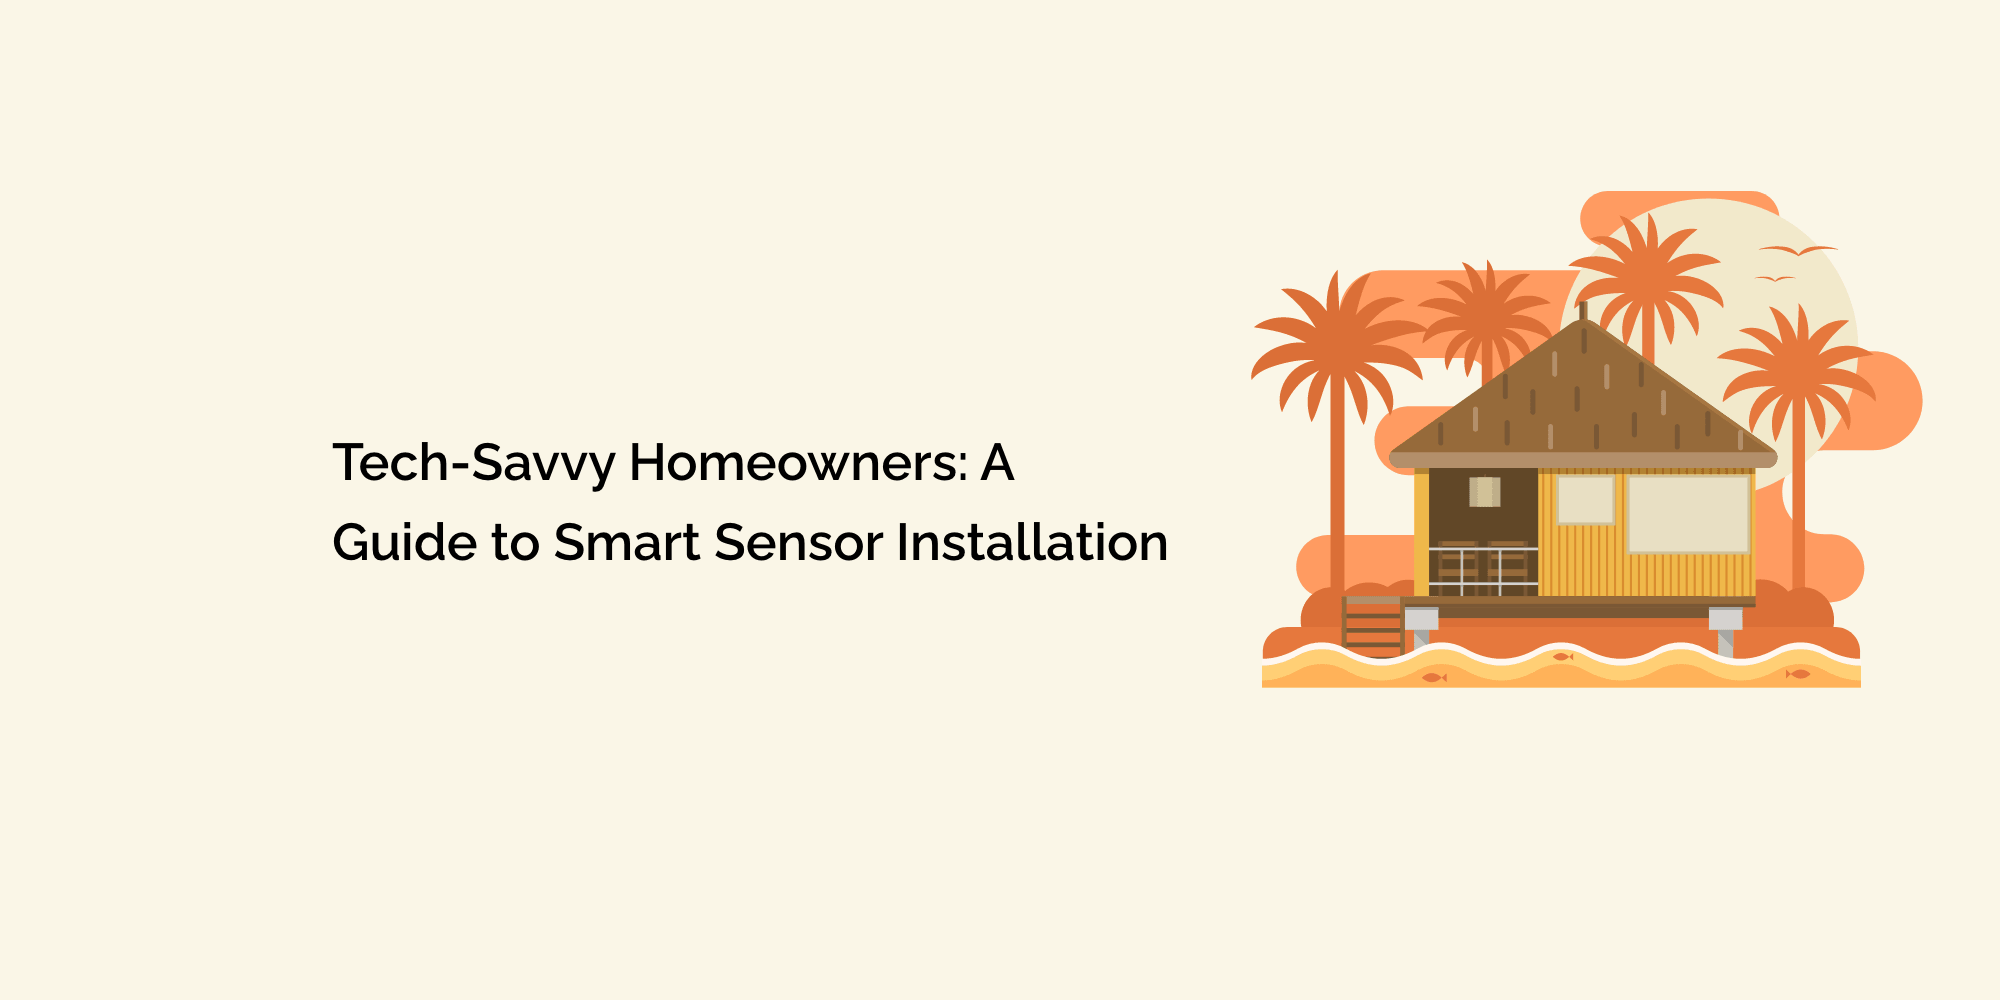 Tech-Savvy Homeowners: A Guide to Smart Sensor Installation